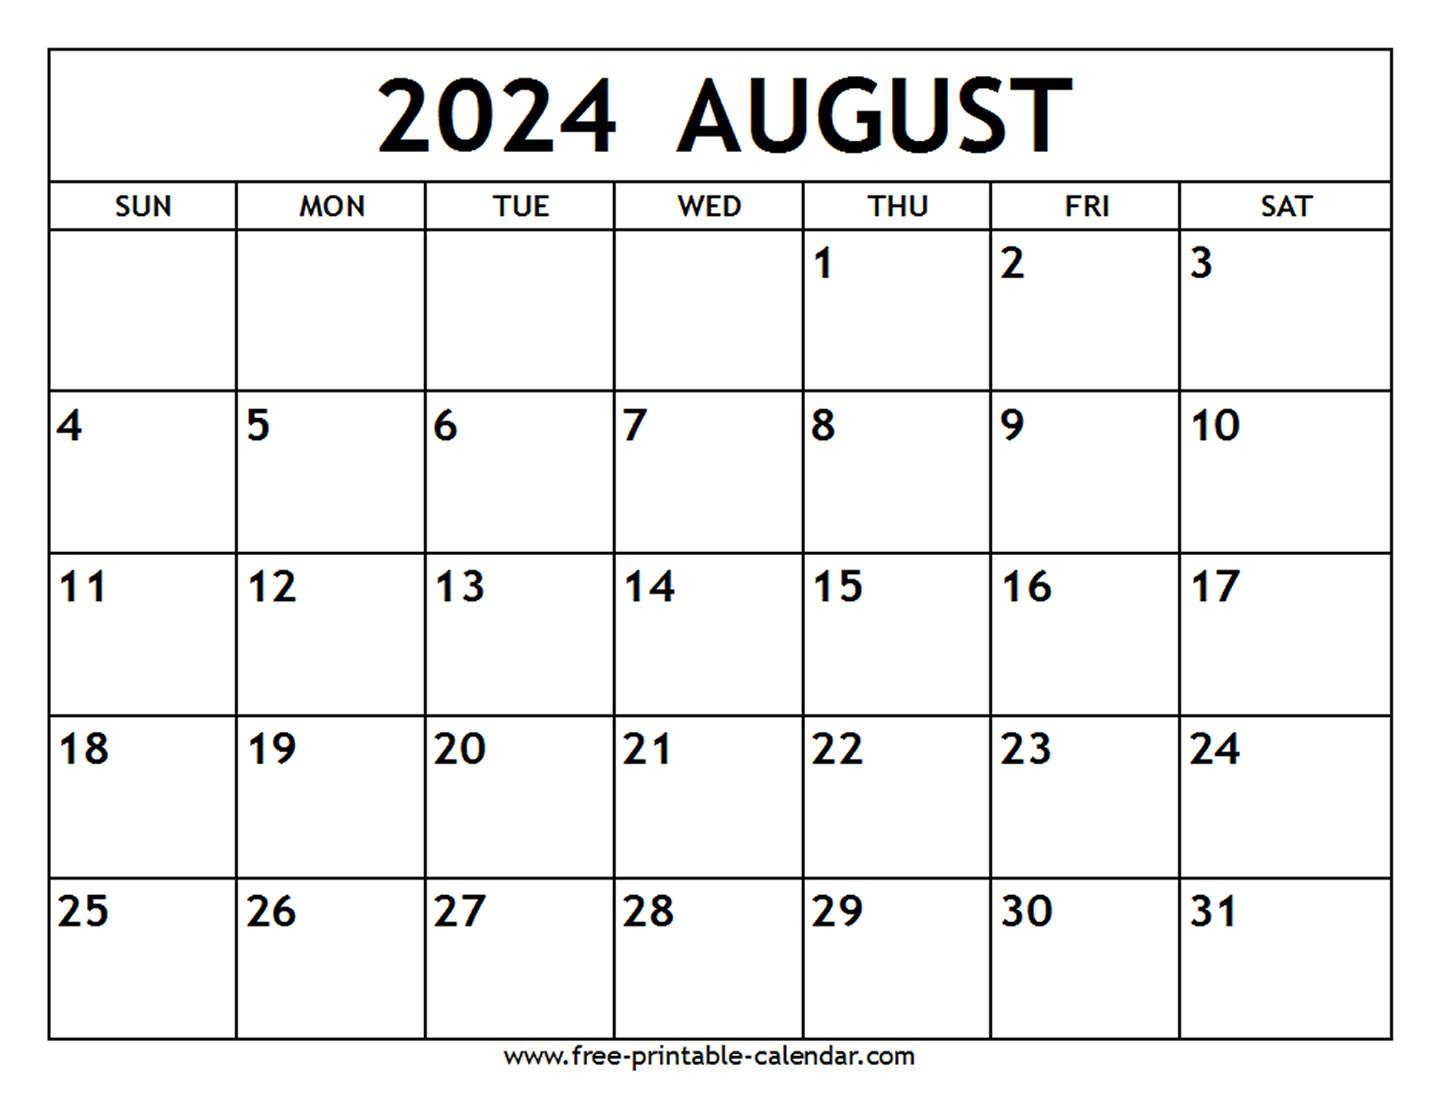 August 2024 Calendar - Free-Printable-Calendar throughout Free Printable August Calendar 2024